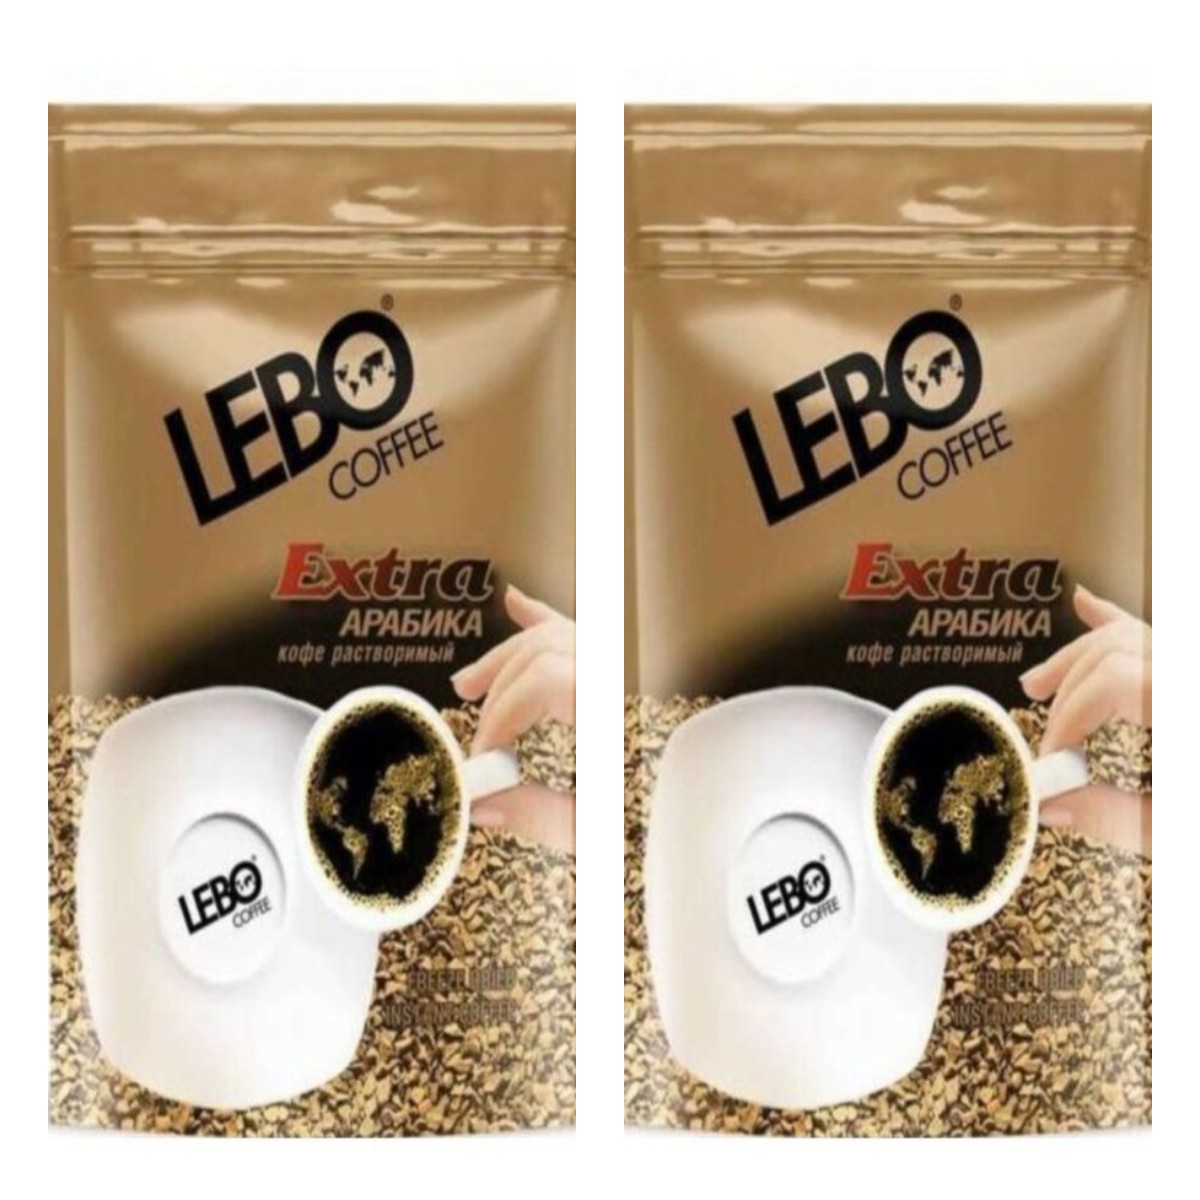 Кофе растворимый Lebo Extra, 70 г х 2 шт